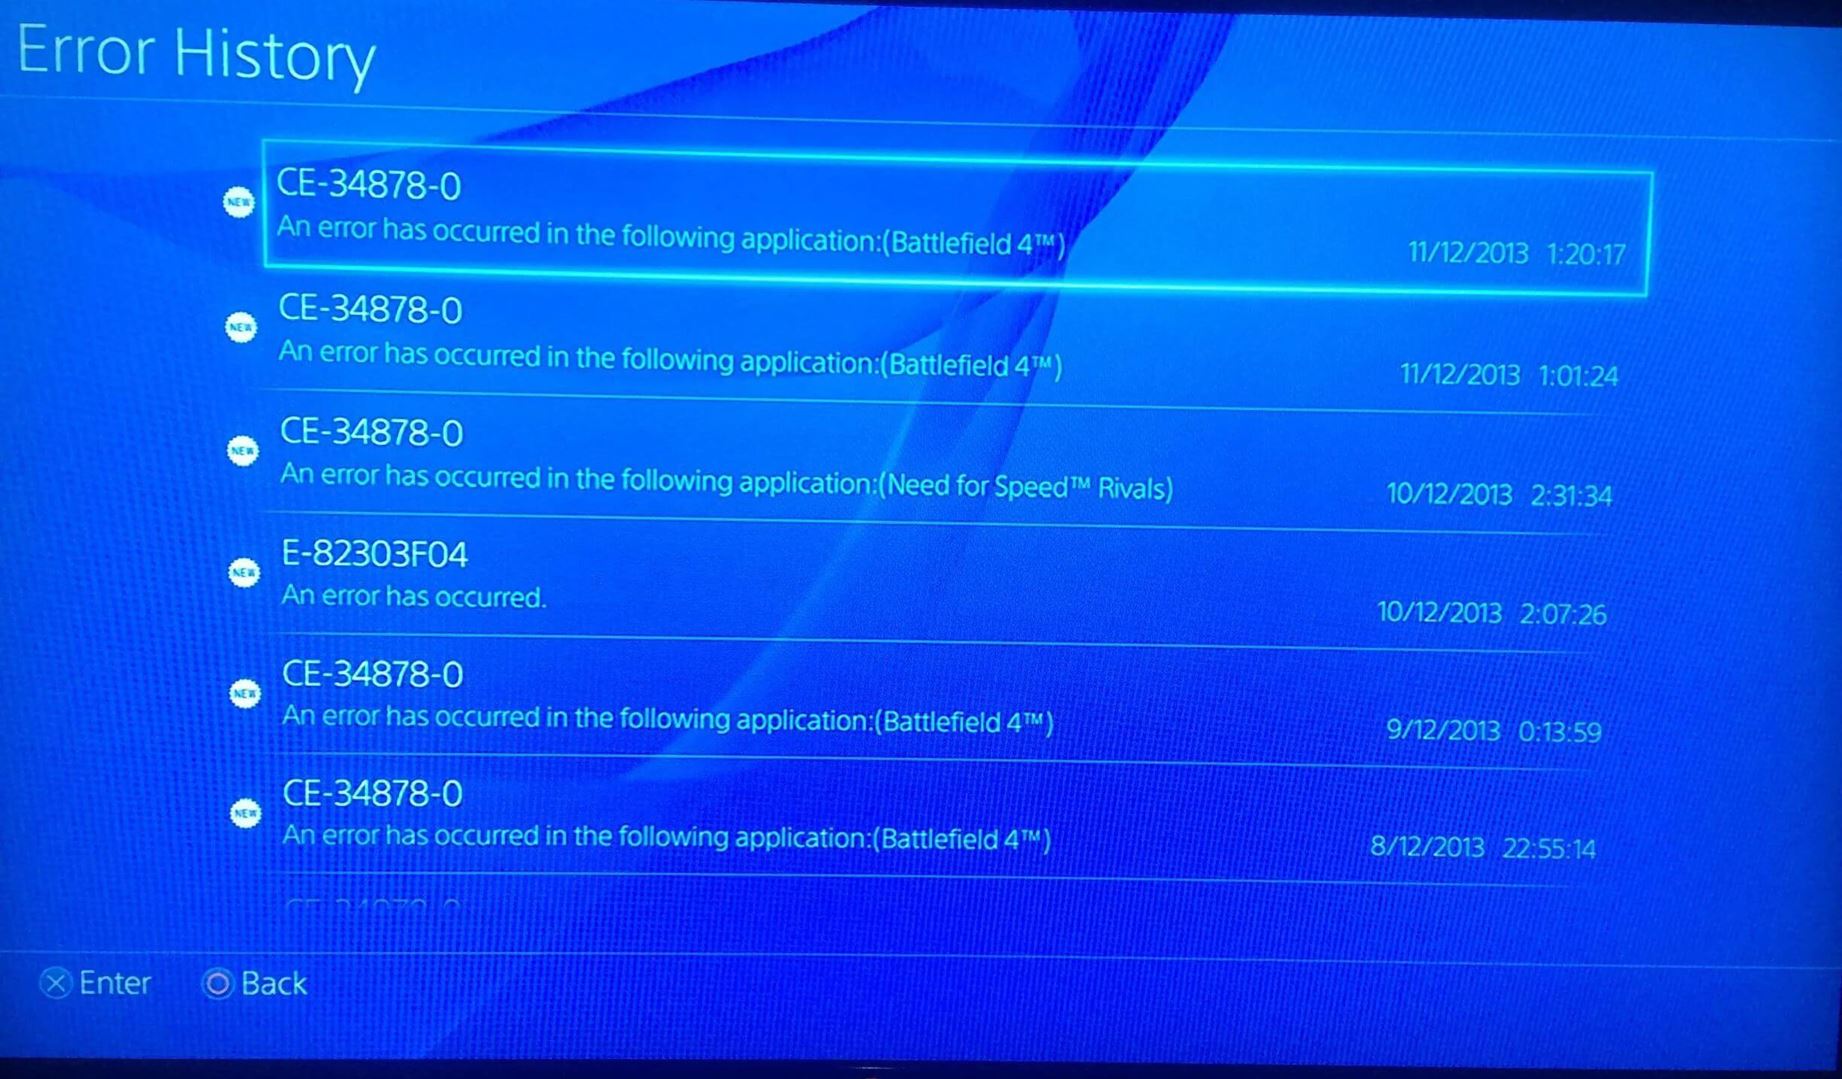 PS4 error codes